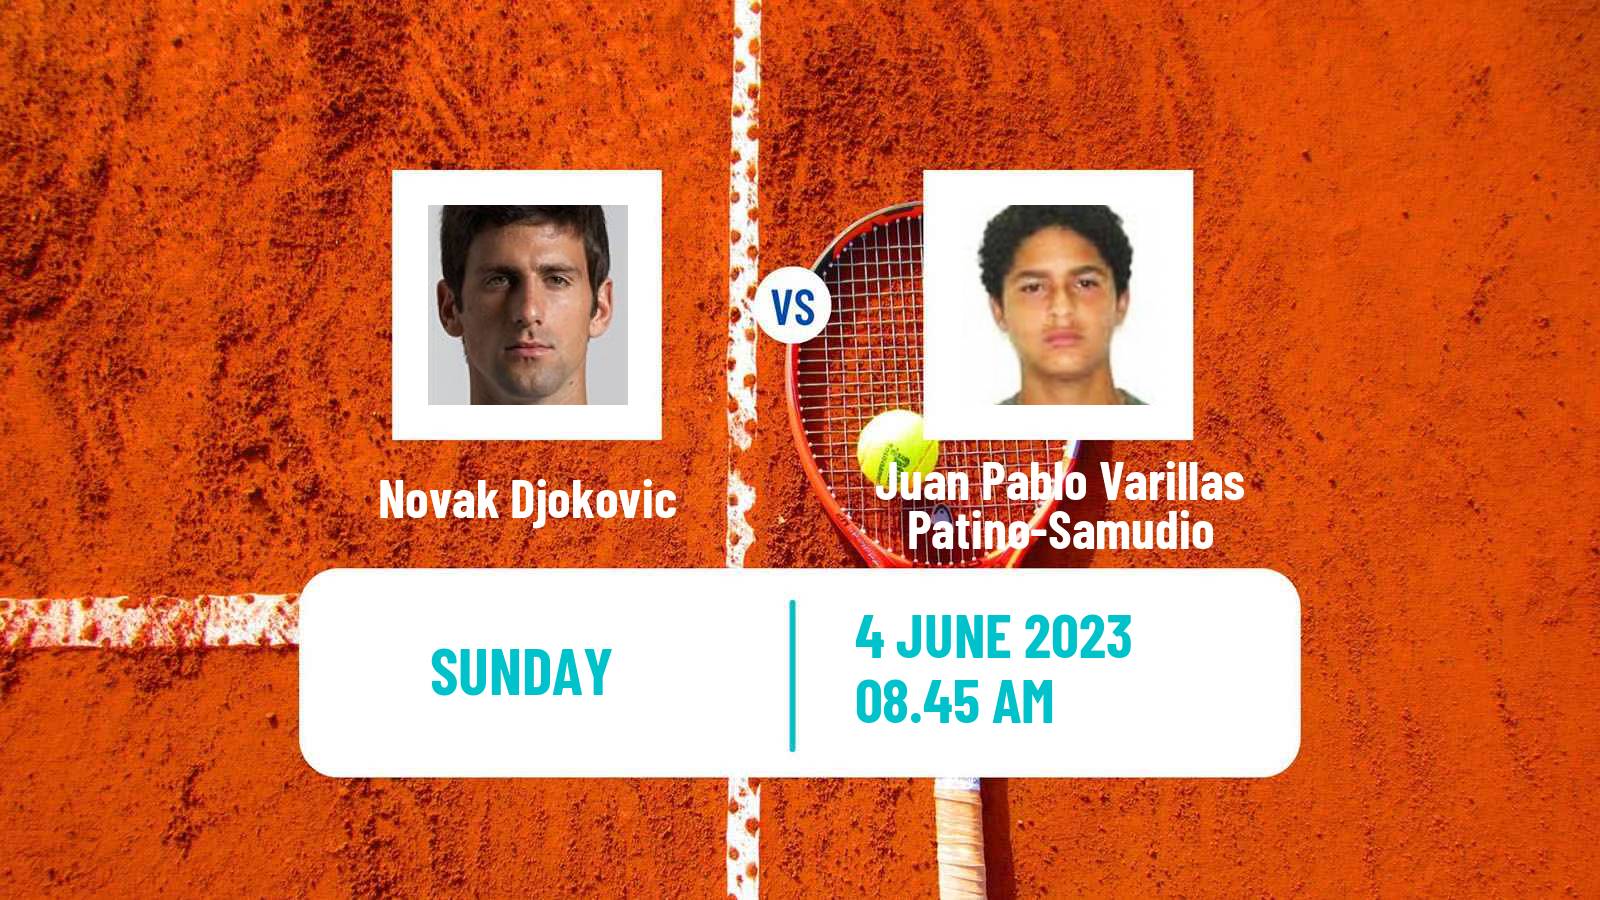 Tennis ATP Roland Garros Novak Djokovic - Juan Pablo Varillas Patino-Samudio